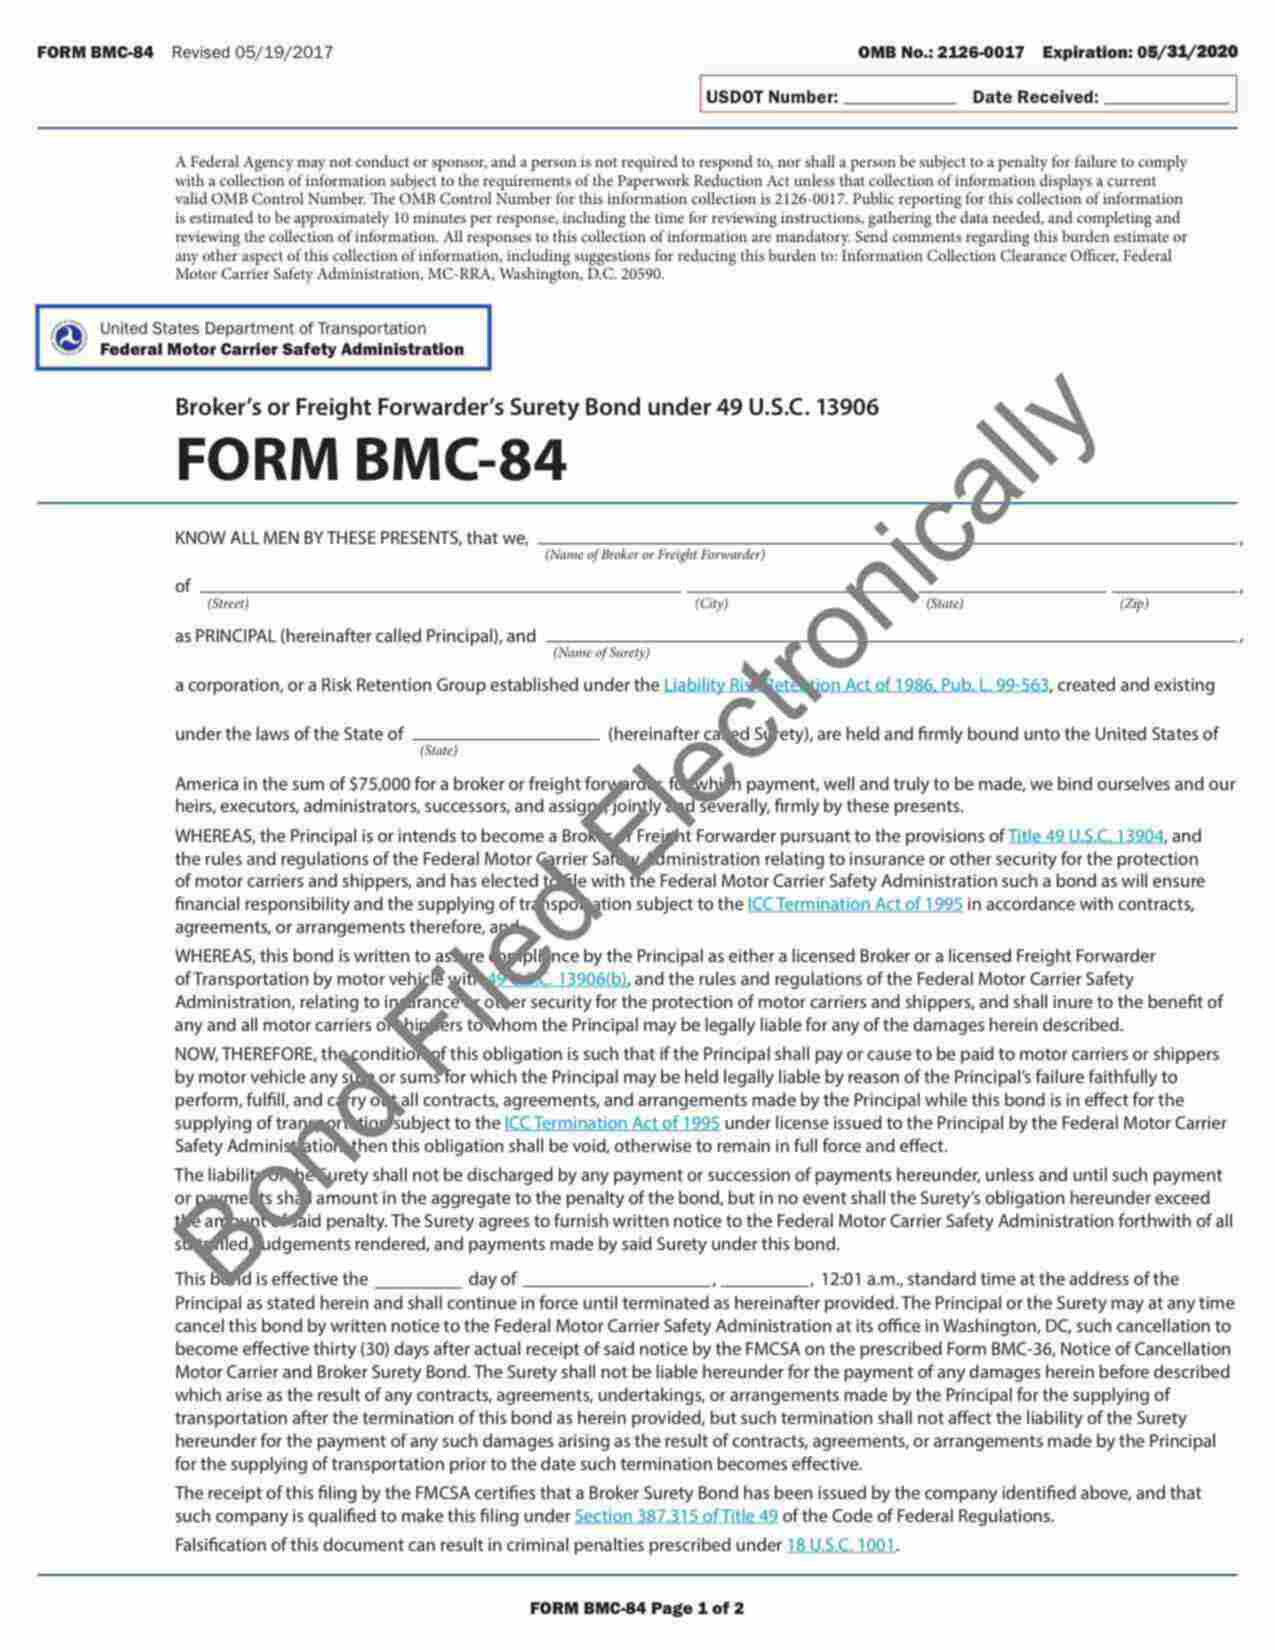 New Mexico Property Broker or Freight Forwarder BMC-84 (ICC Broker) Bond Form